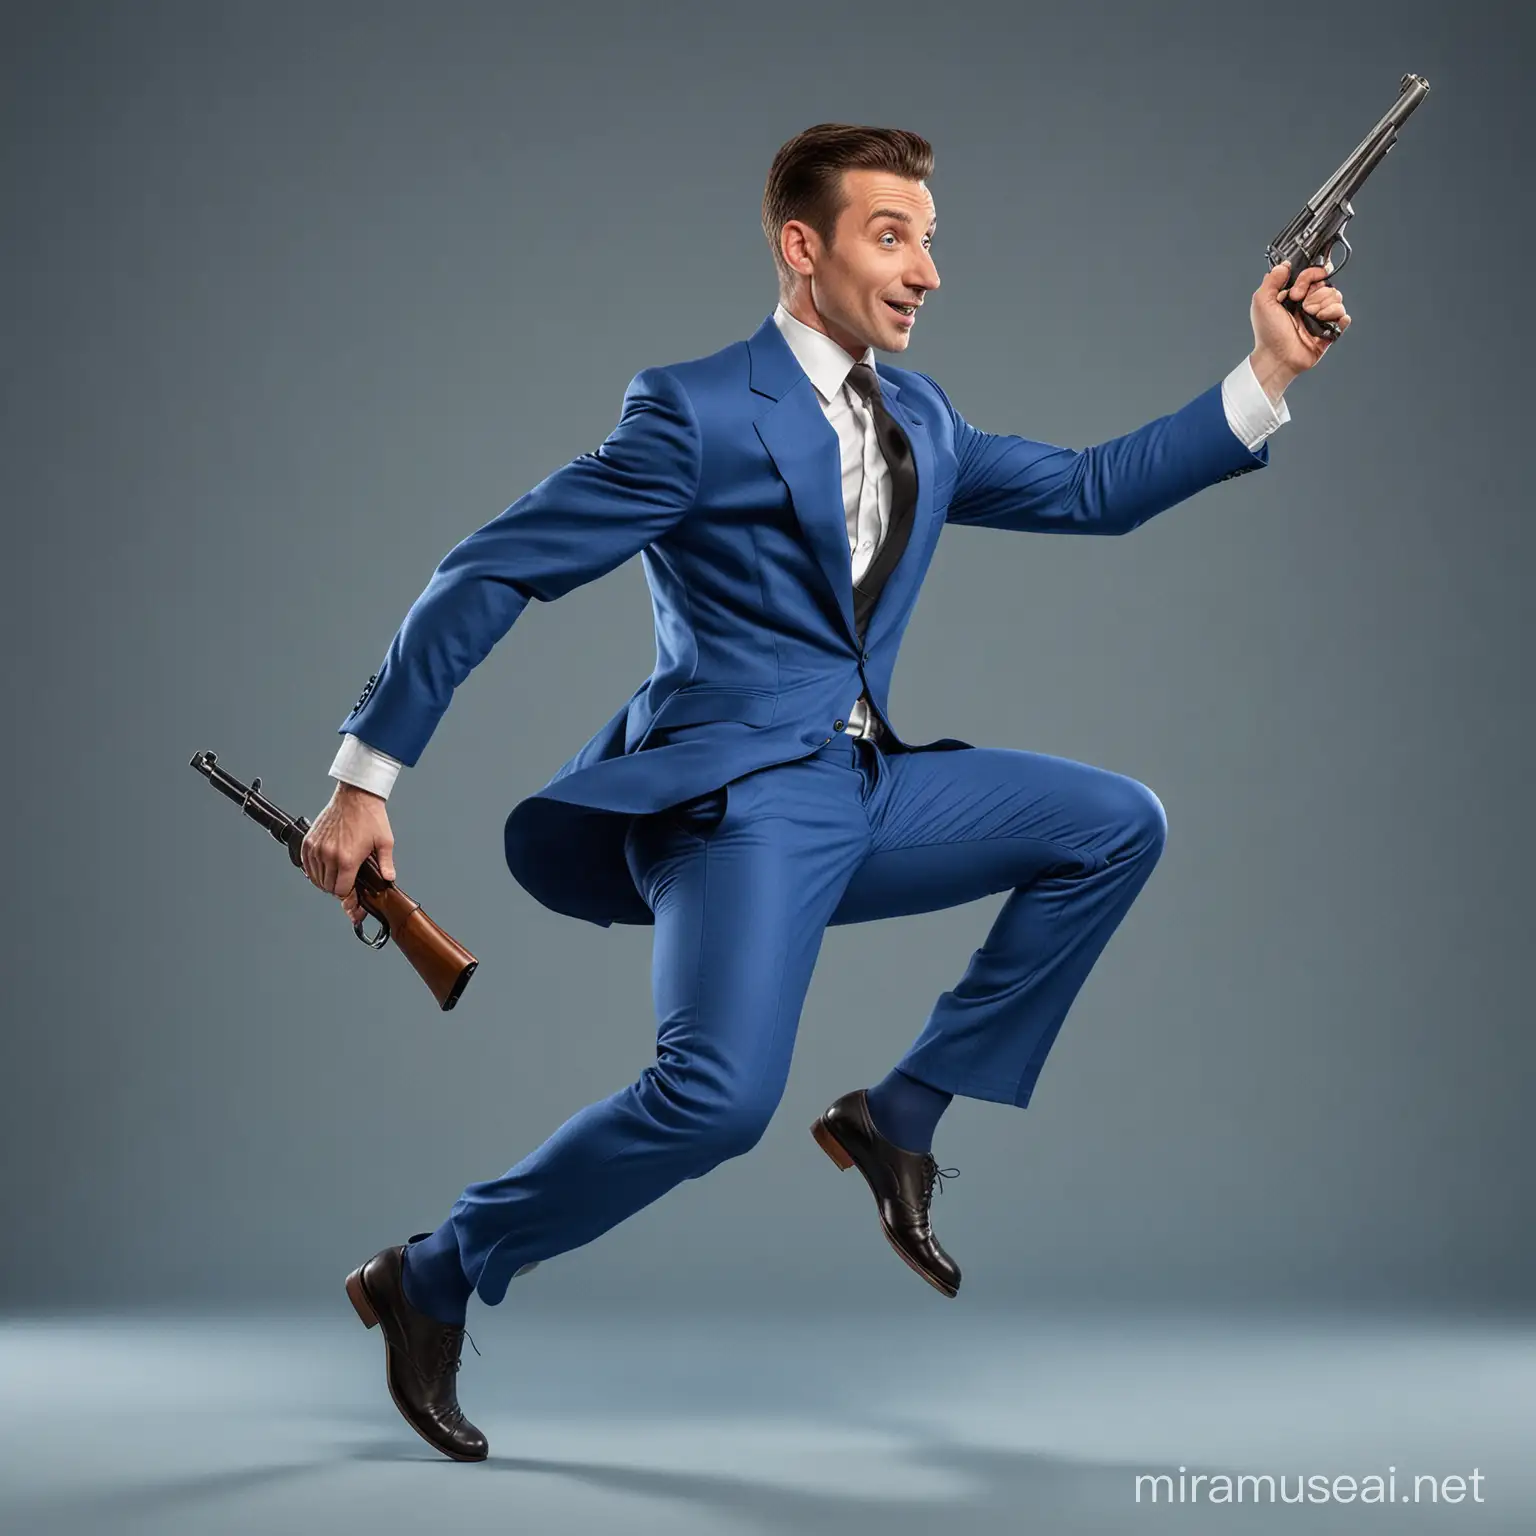 Elegant Caricature Man in Blue Suit Balances Acrobatically with Gun